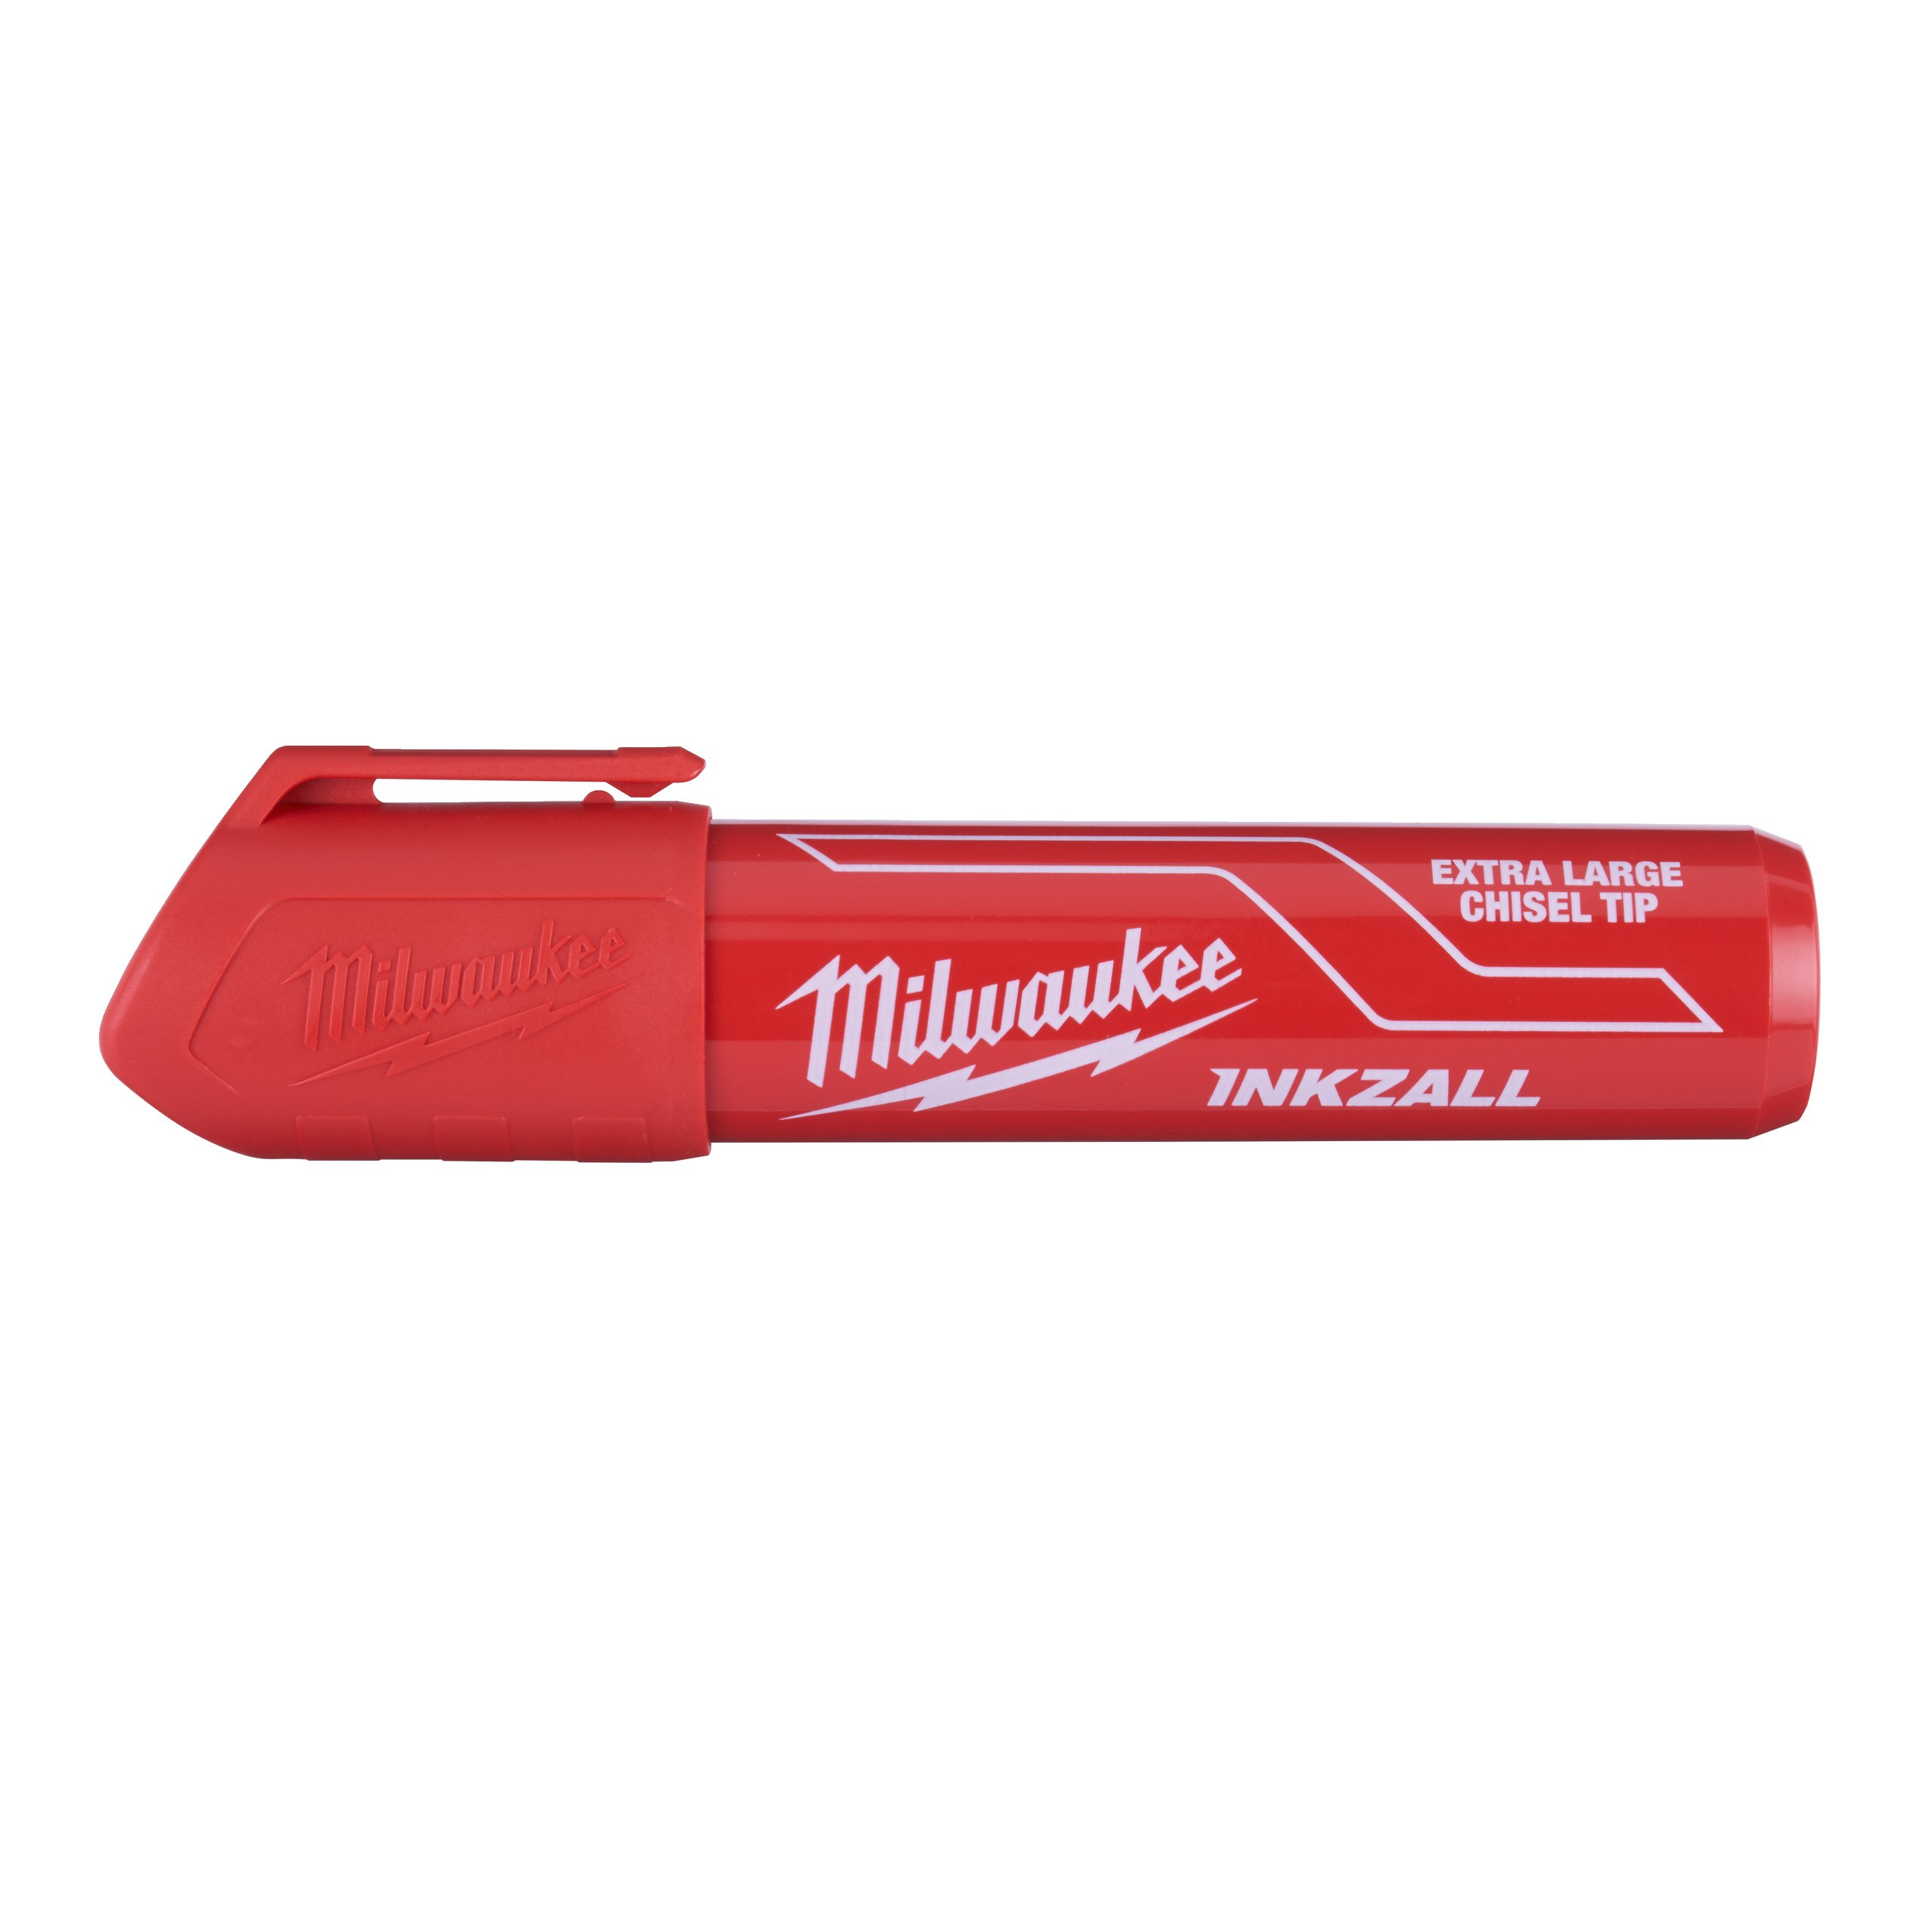 Milwaukee INKZALL Red XL Chisel Tip Marker 4932471560